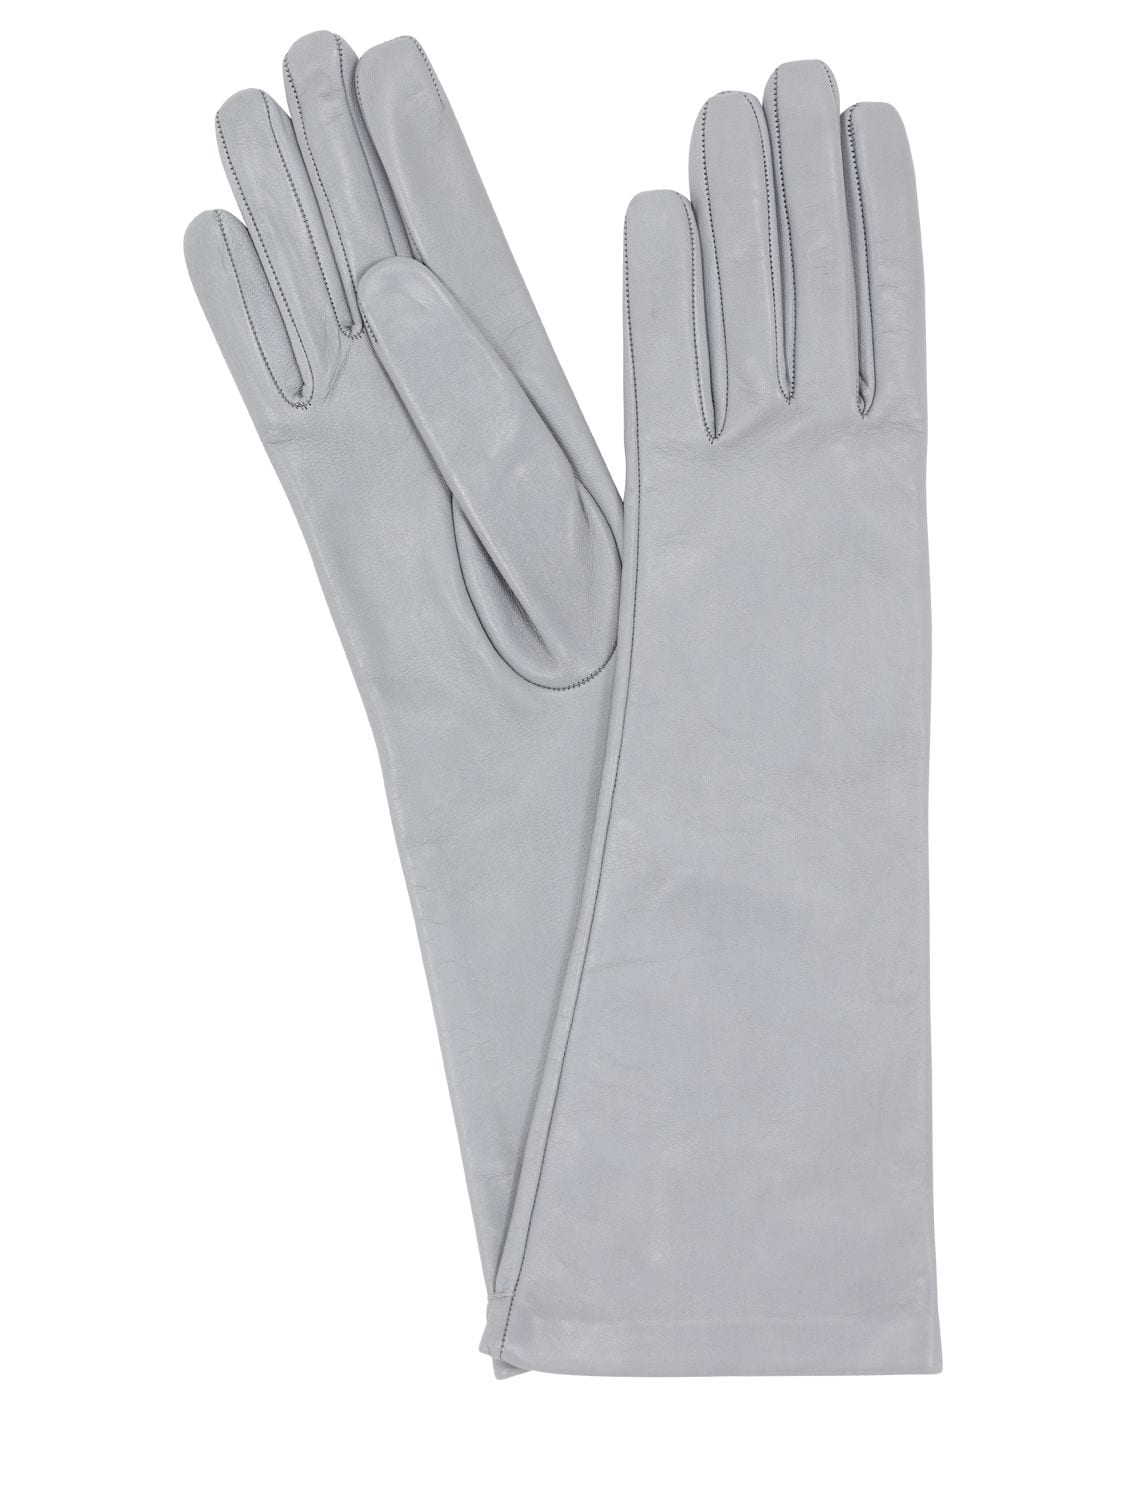 Mario Portolano Long Leather Gloves In Grey